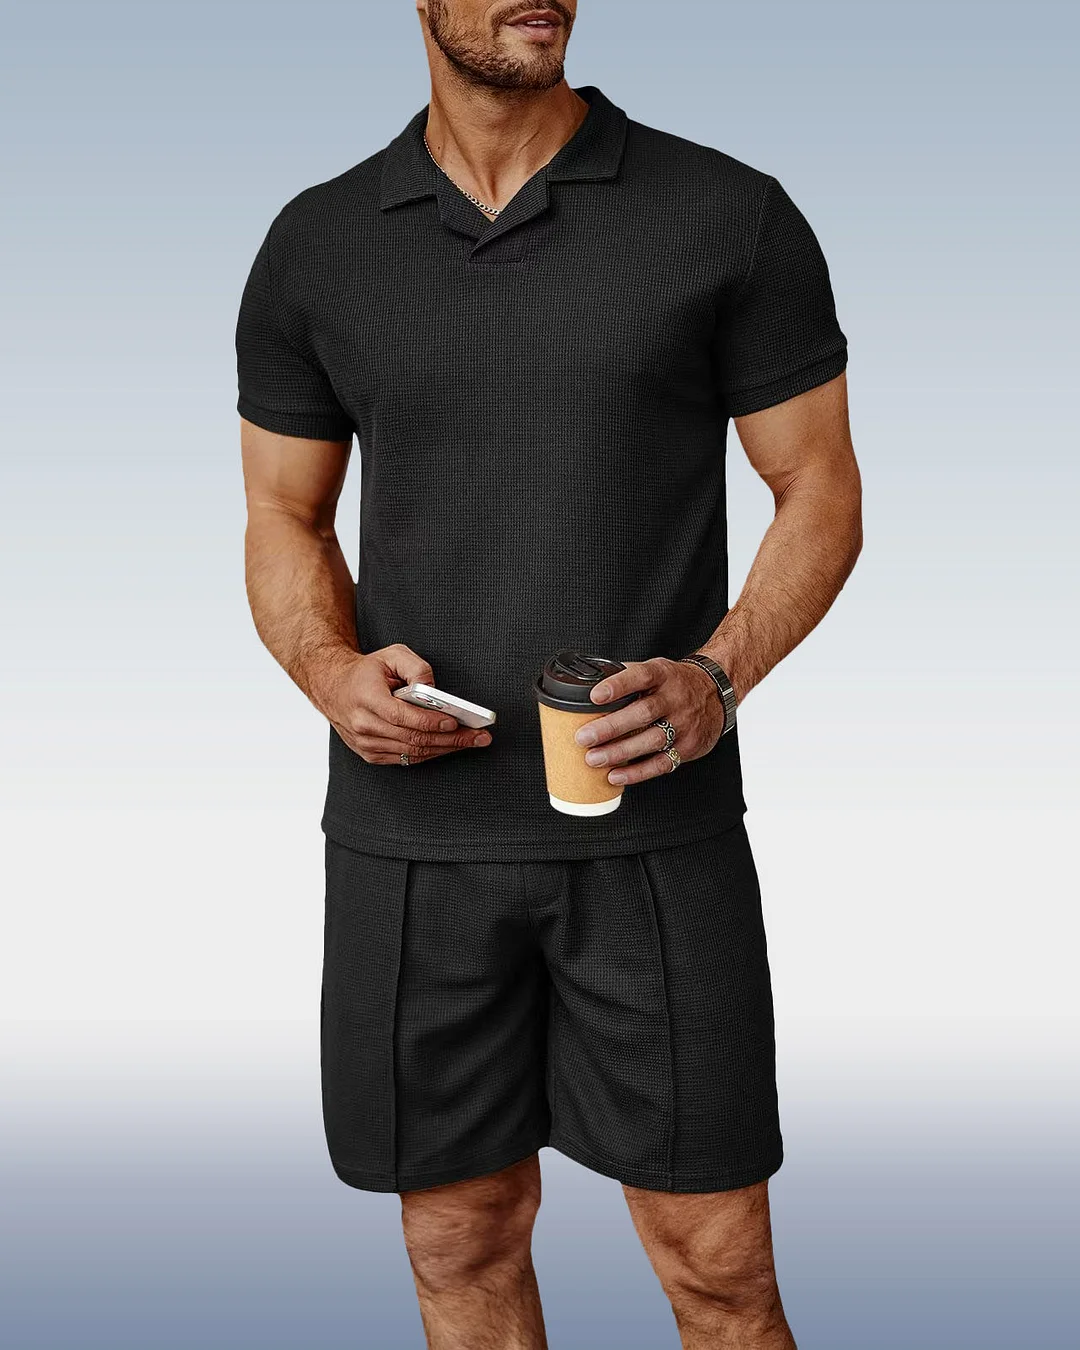 Suitmens Men's Black Knit V-Neck Polo Shirt